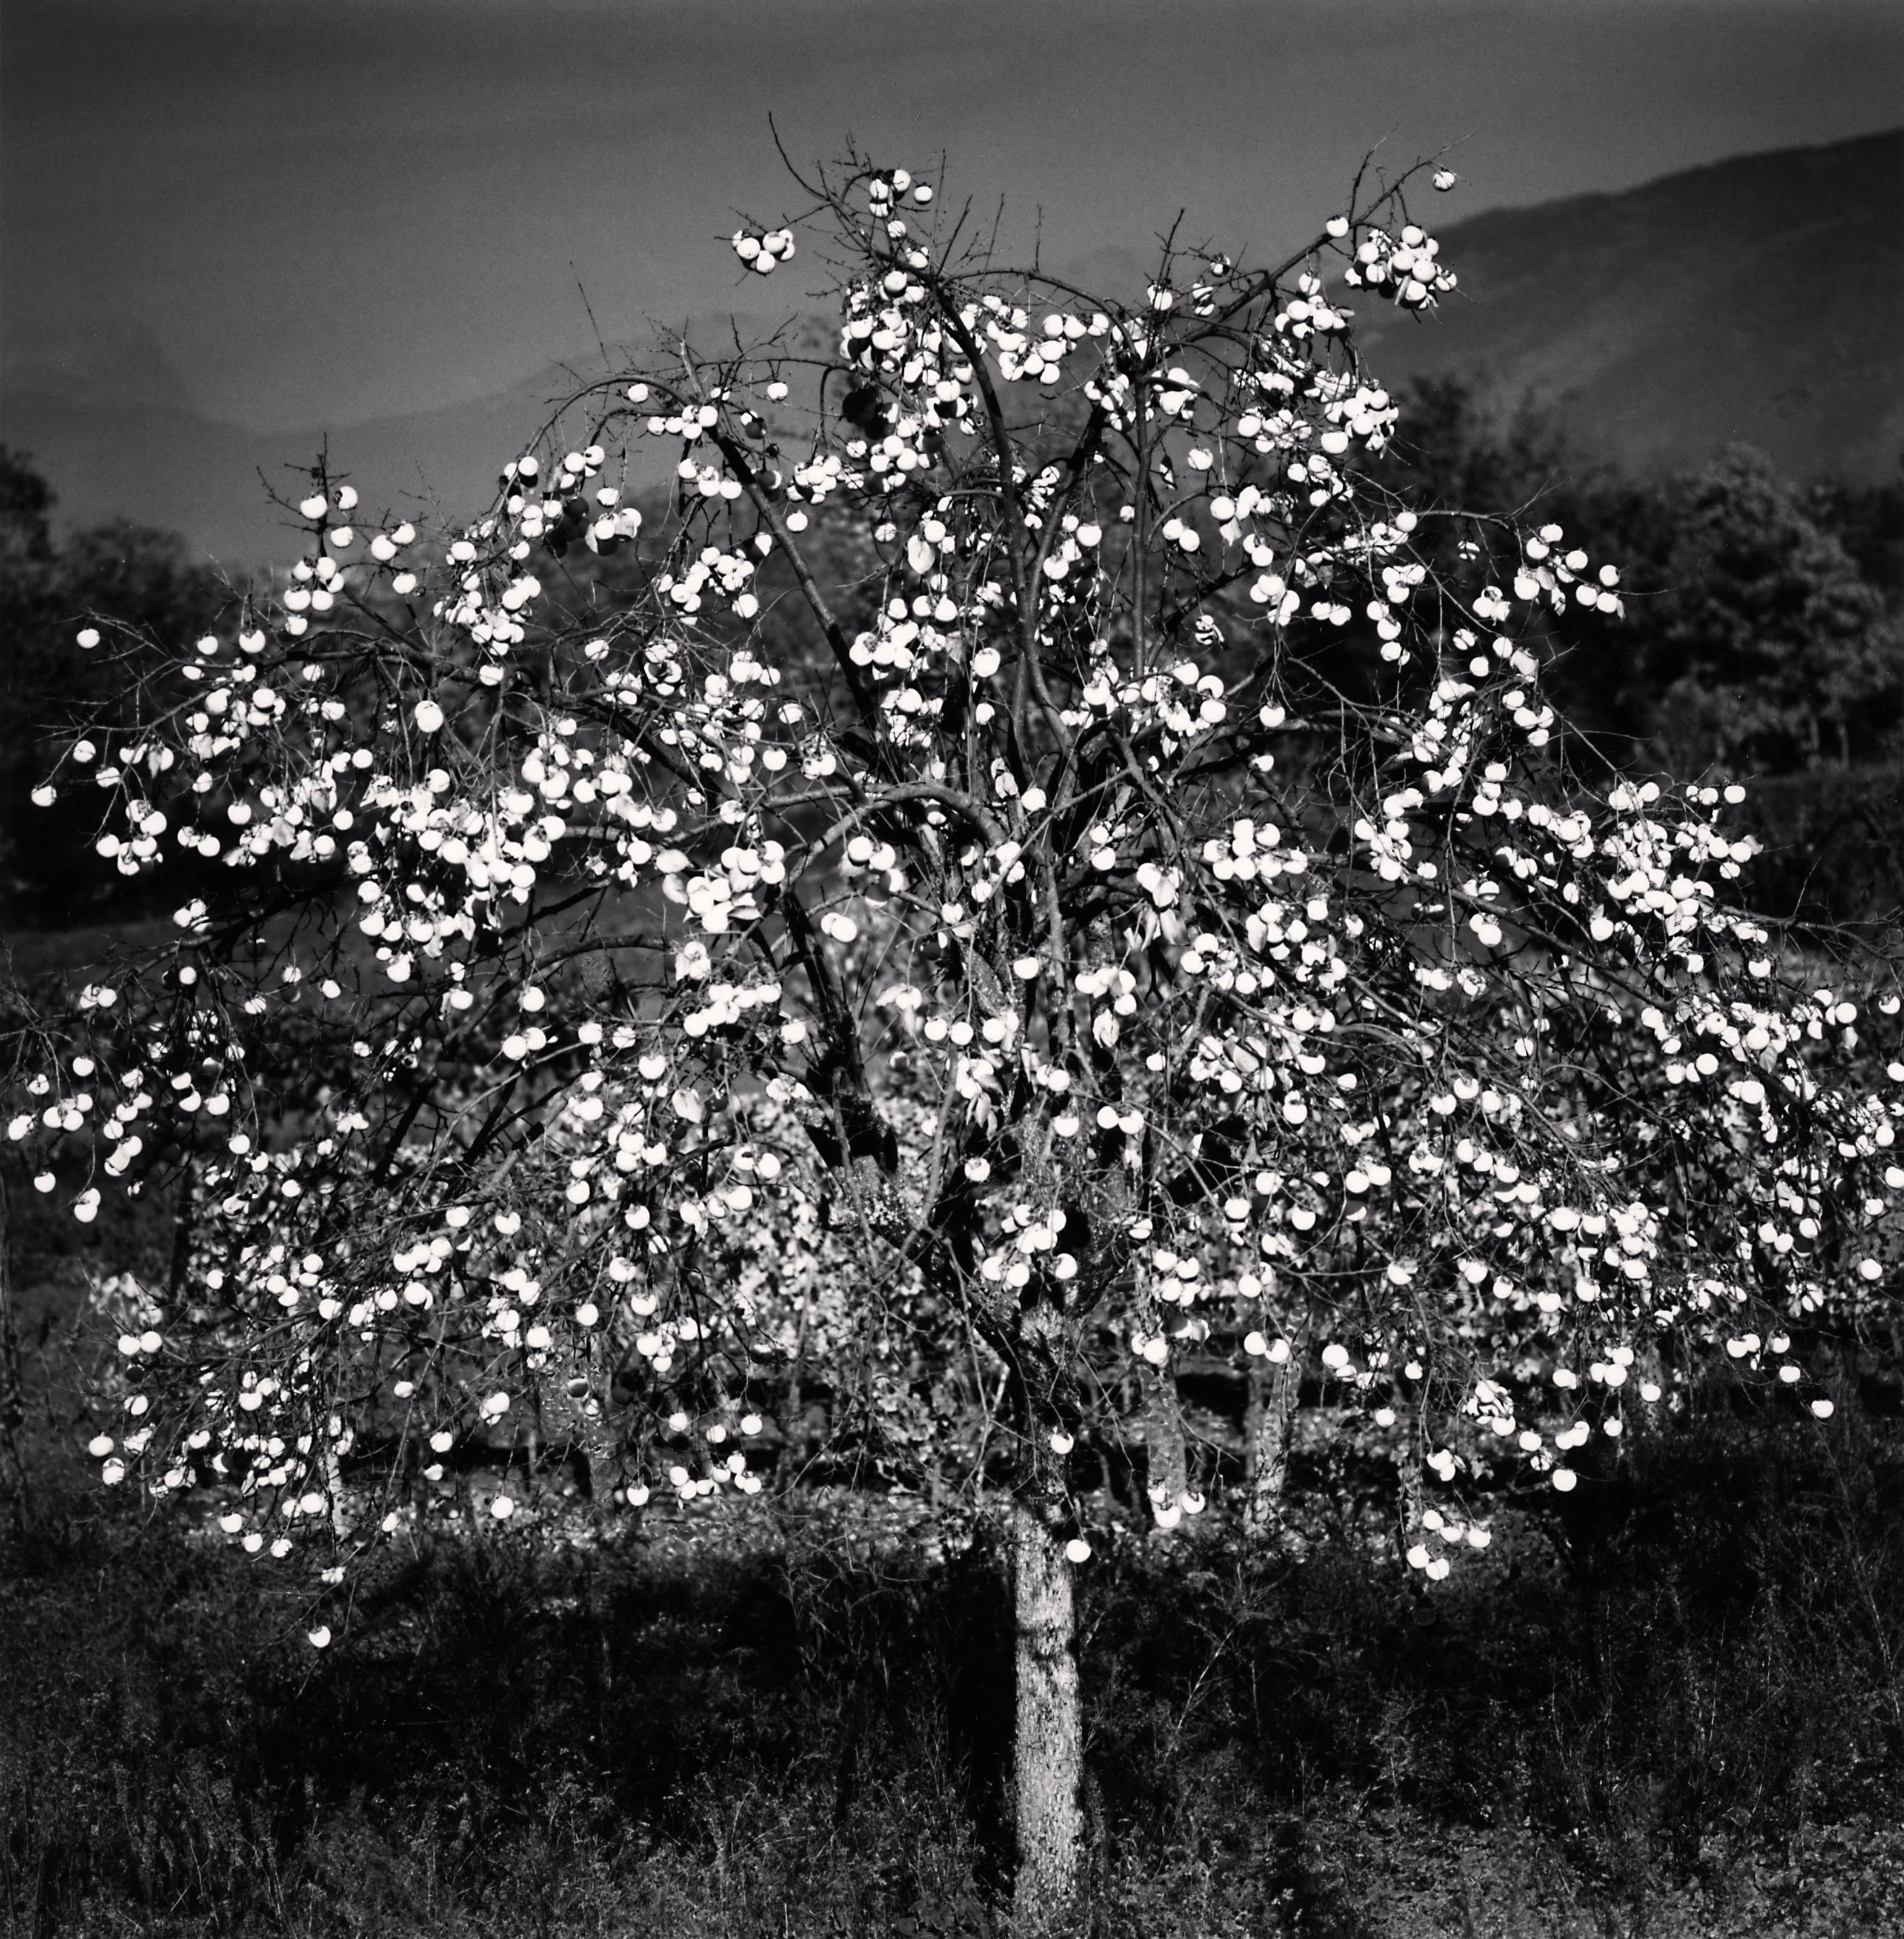 Persimmon Tree, Sulmona, Abruzzo, Italy, 2015 - Michael Kenna (Black and White)